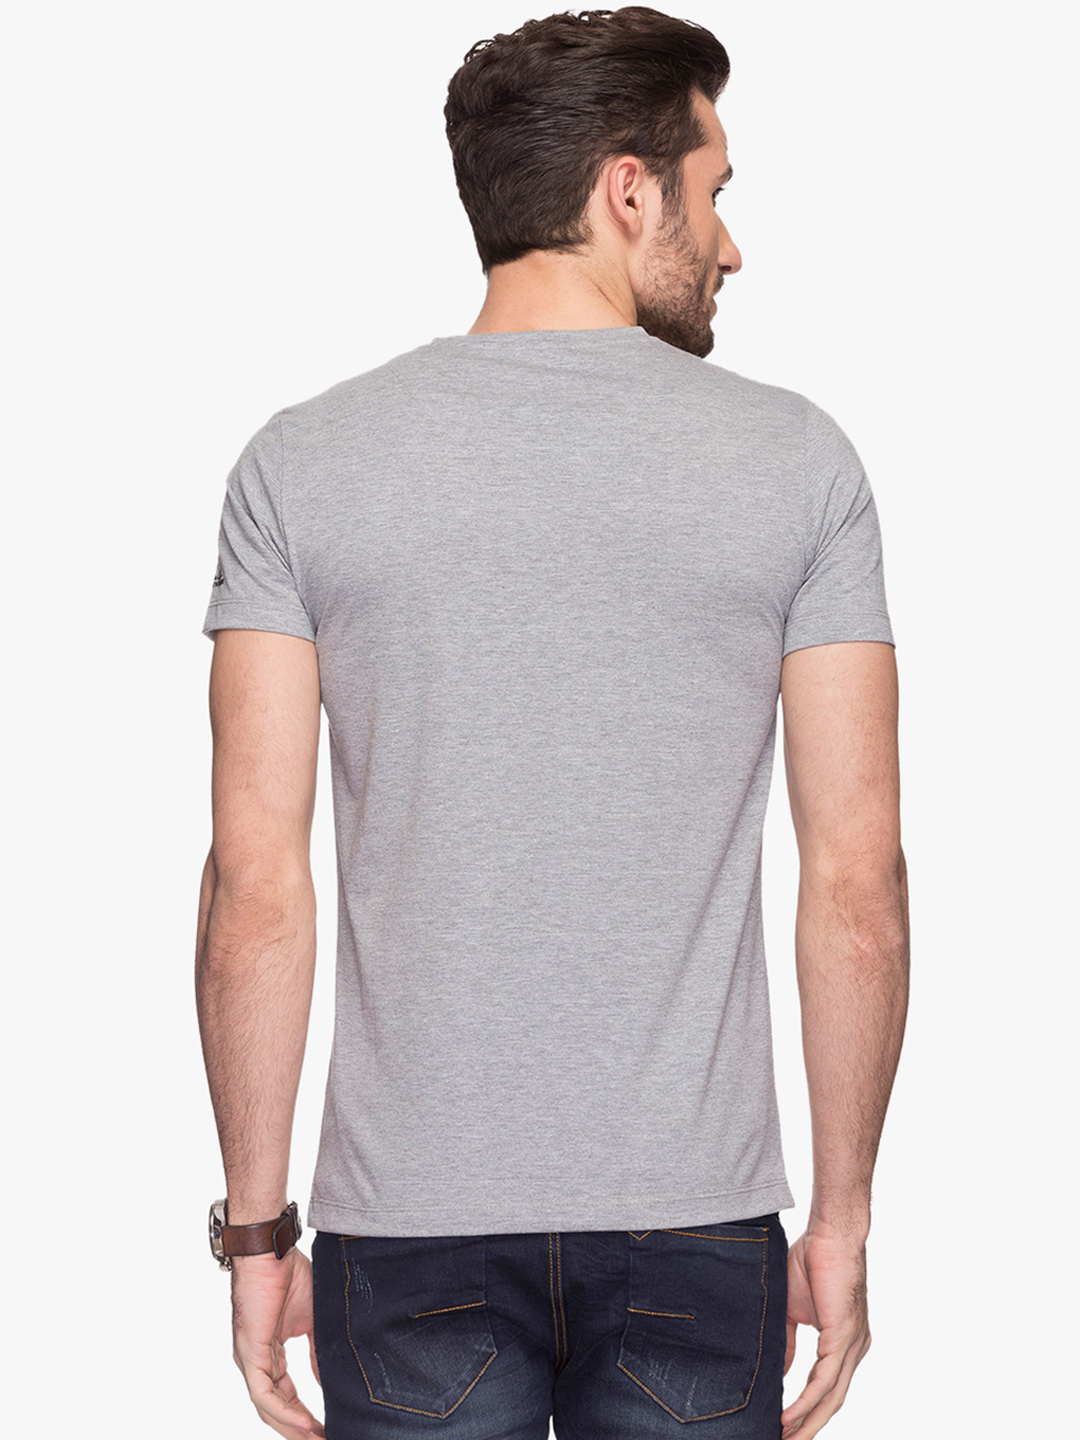 Status Quo grey cotton plain t-shirt - G3-MTS5071 | G3fashion.com